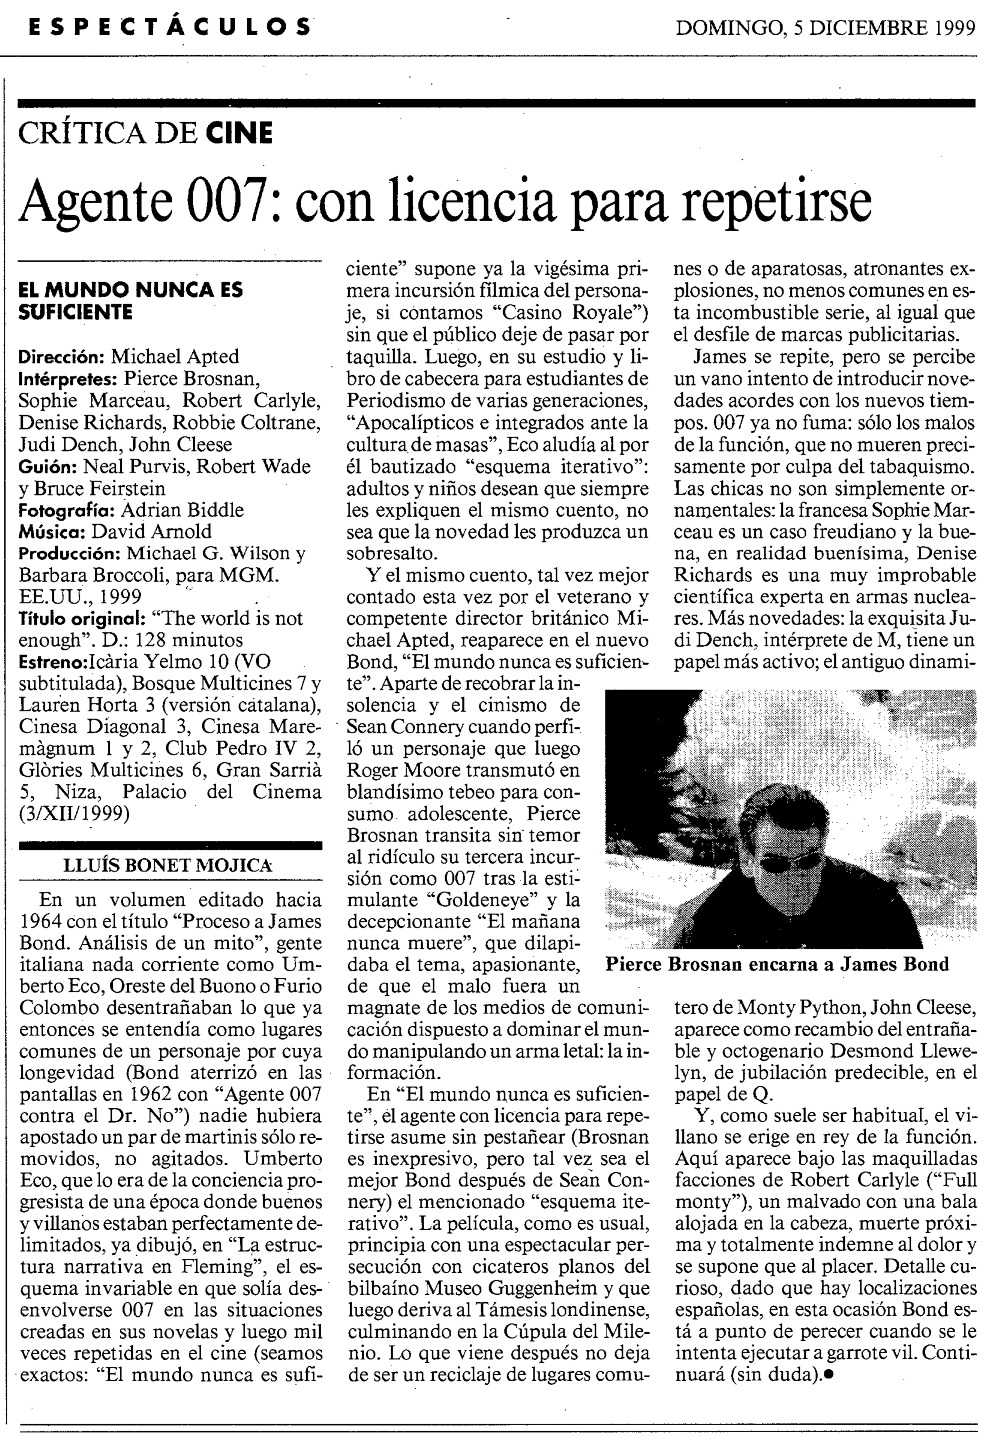 19 1999 12 05 La Vanguardia Barcelona 058 Critica